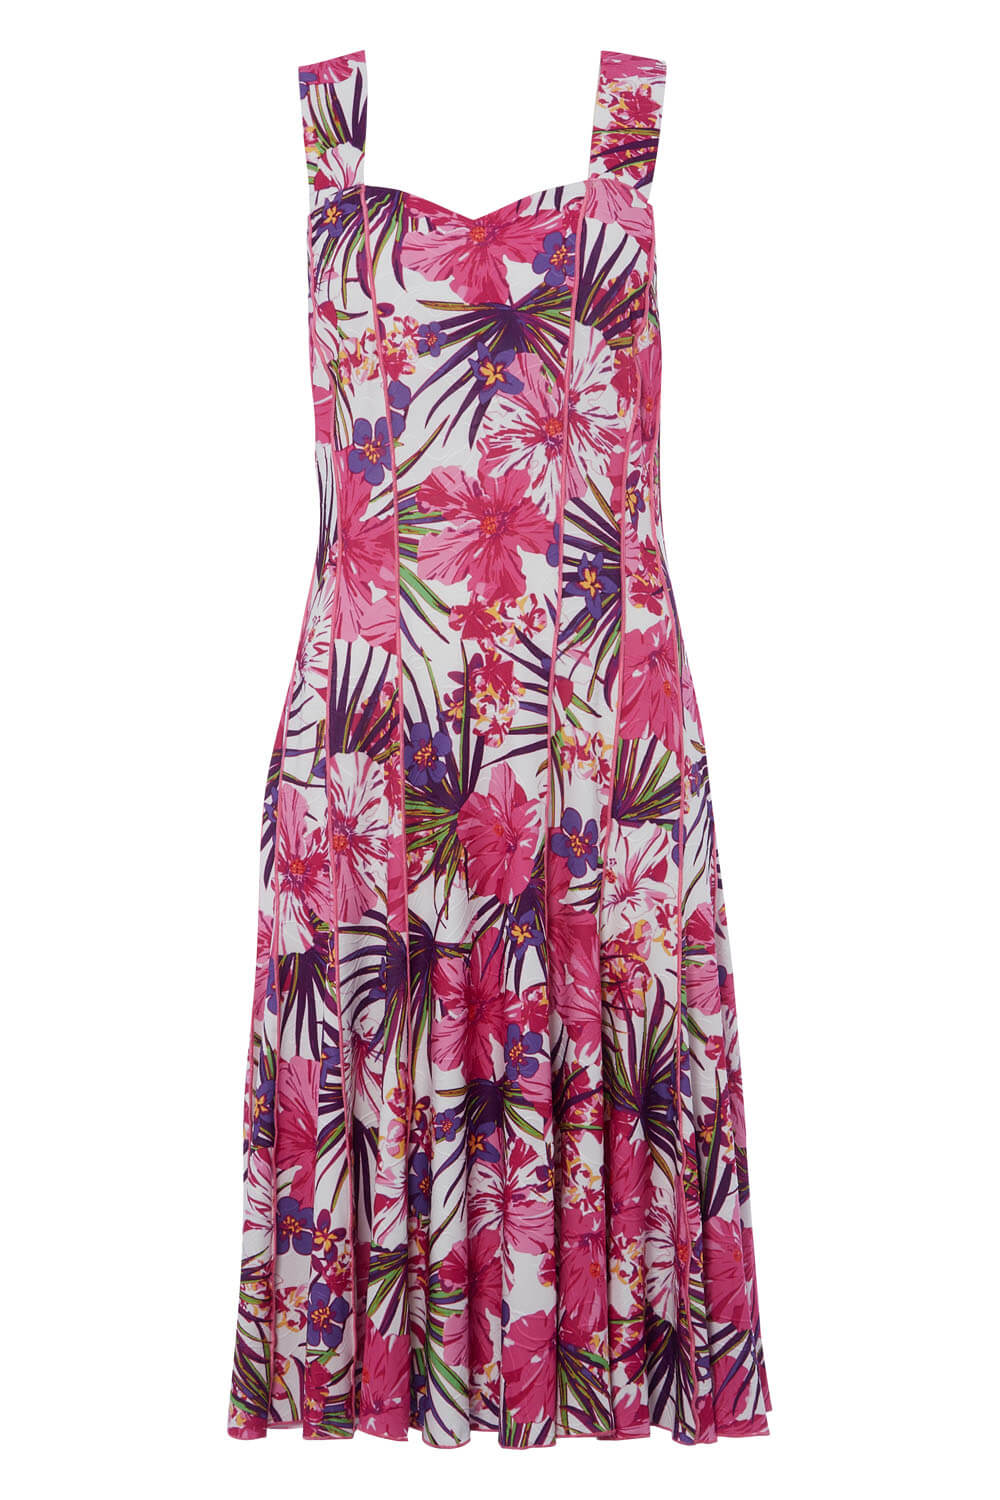 Tropical Floral Panel Dress in Pink - Roman Originals UK